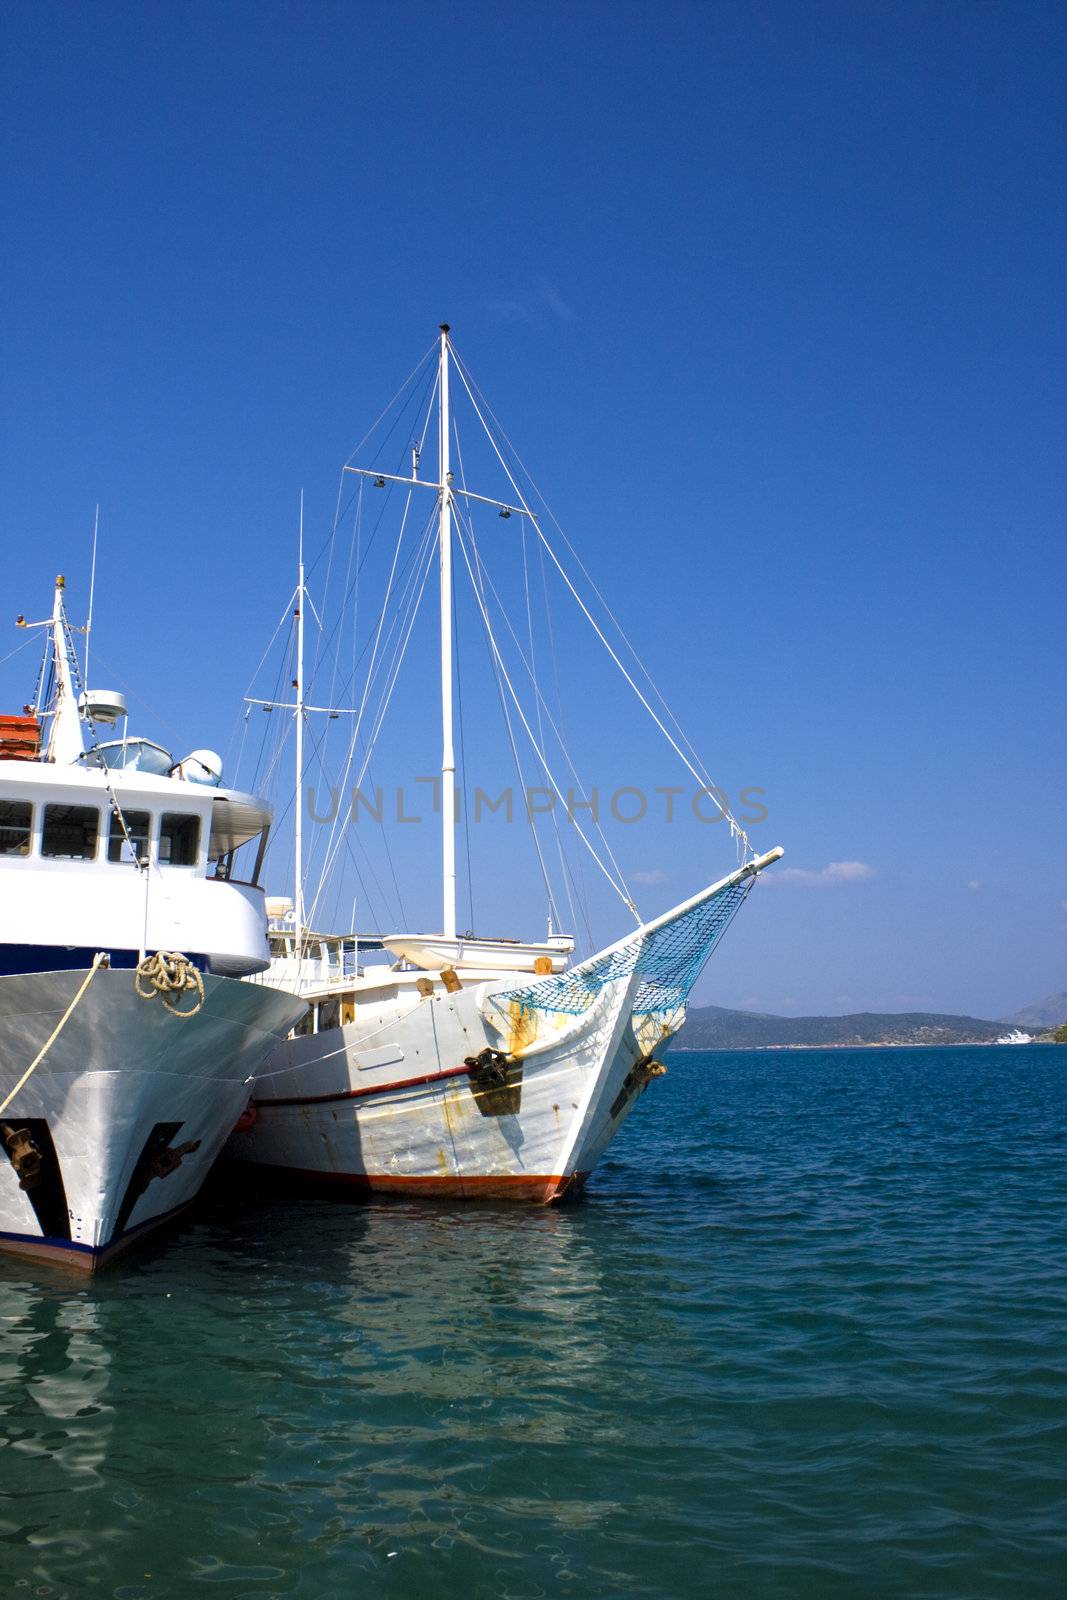 Boats at Poros Island, Greece by shariffc